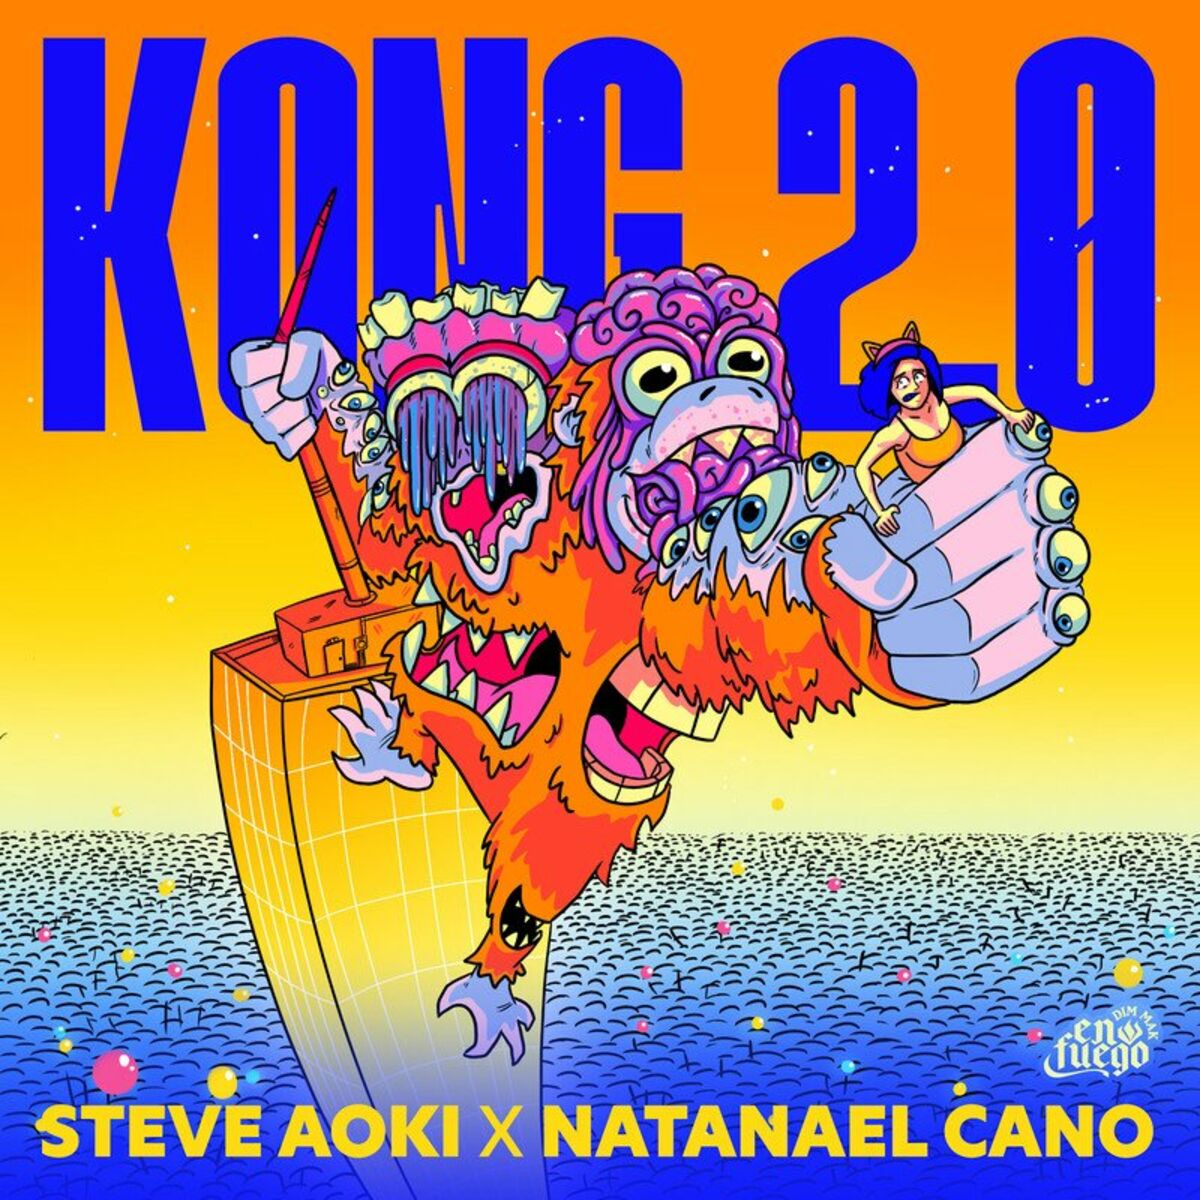 Steve Aoki Ft. Natanael Cano - Kong 2.0